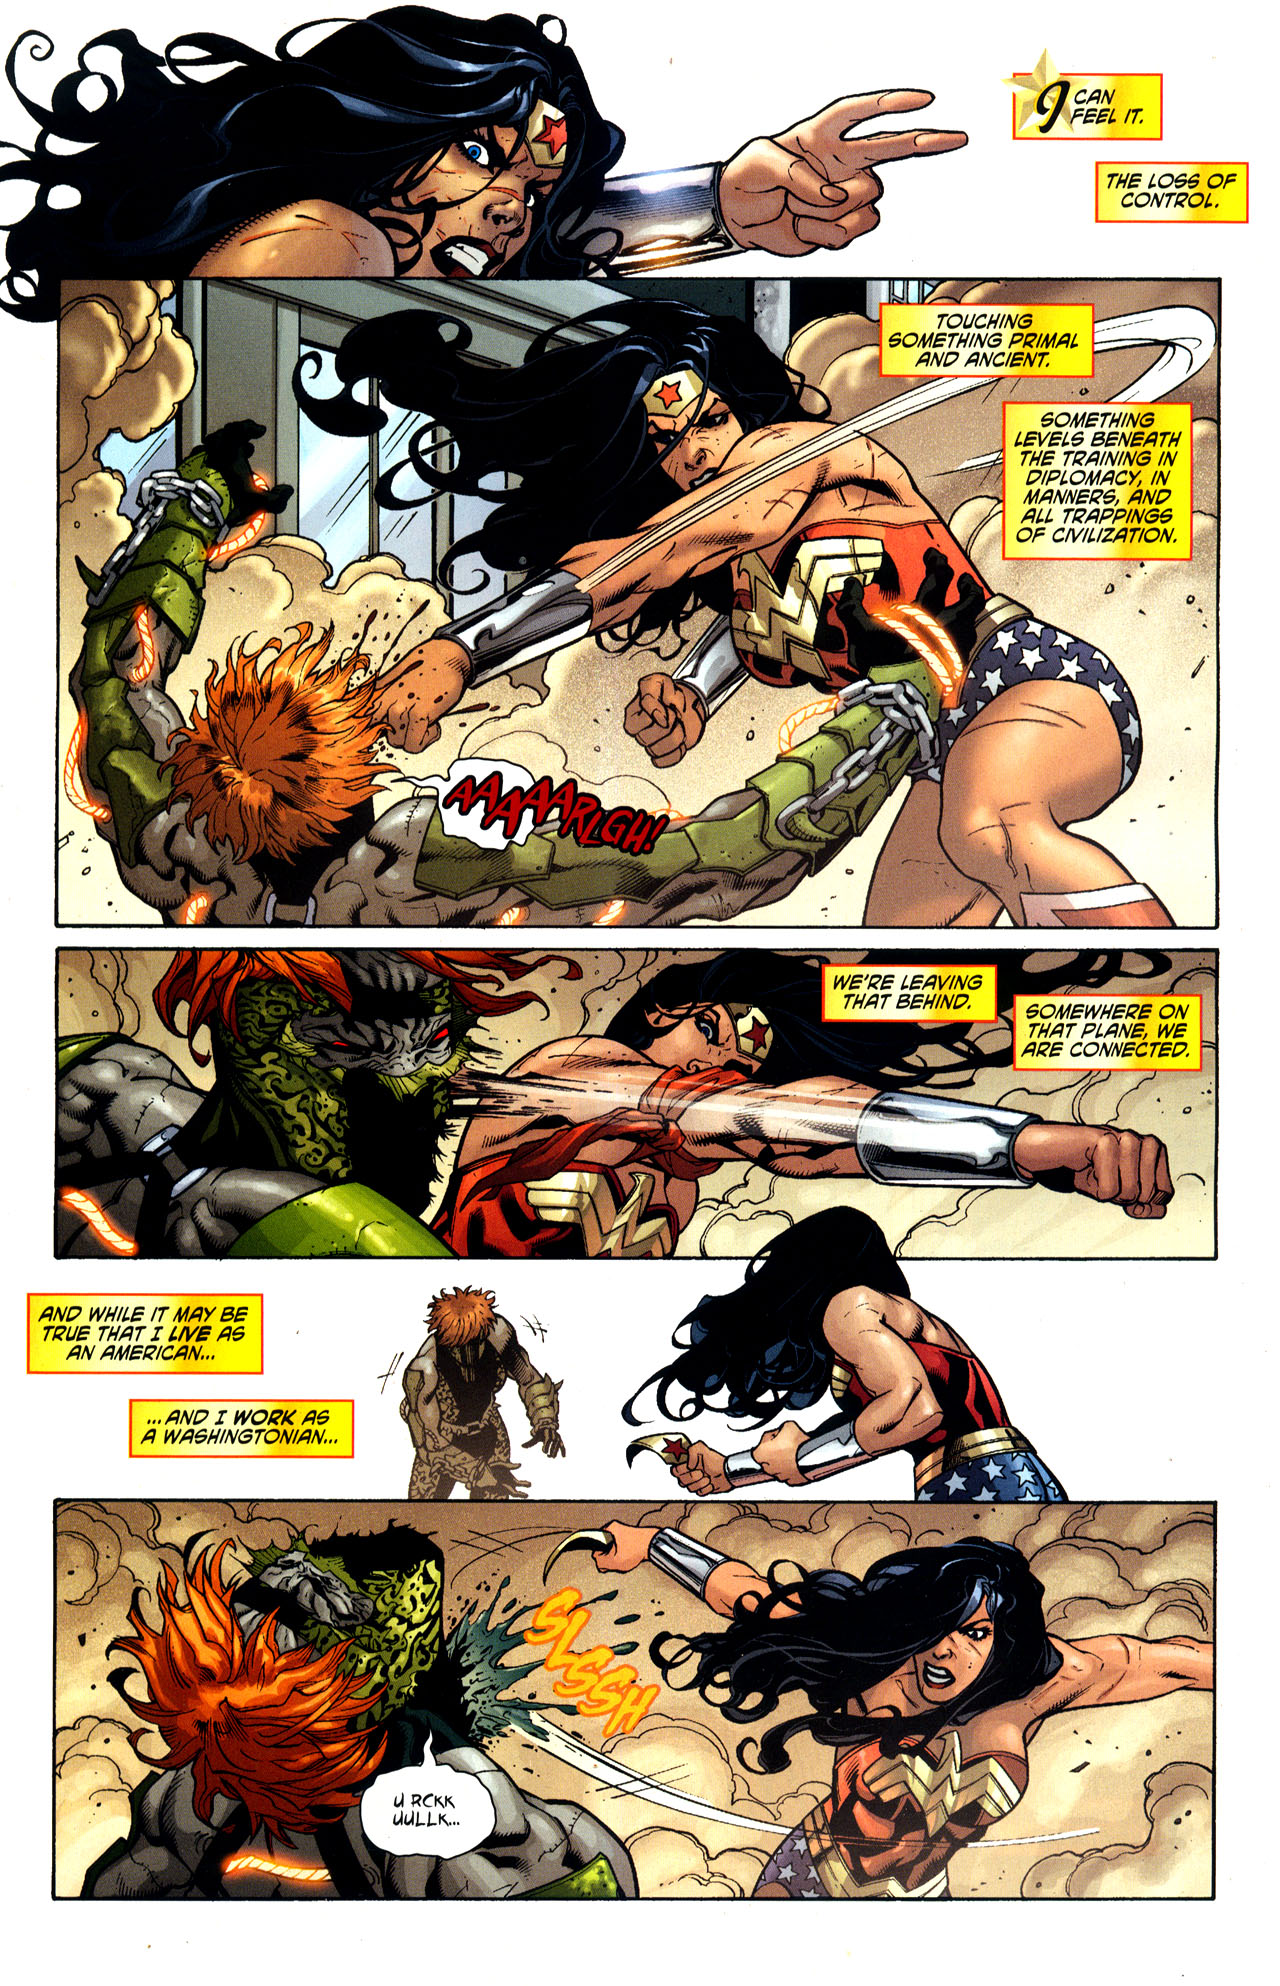 Wonder Woman (2006) 32 Page 11